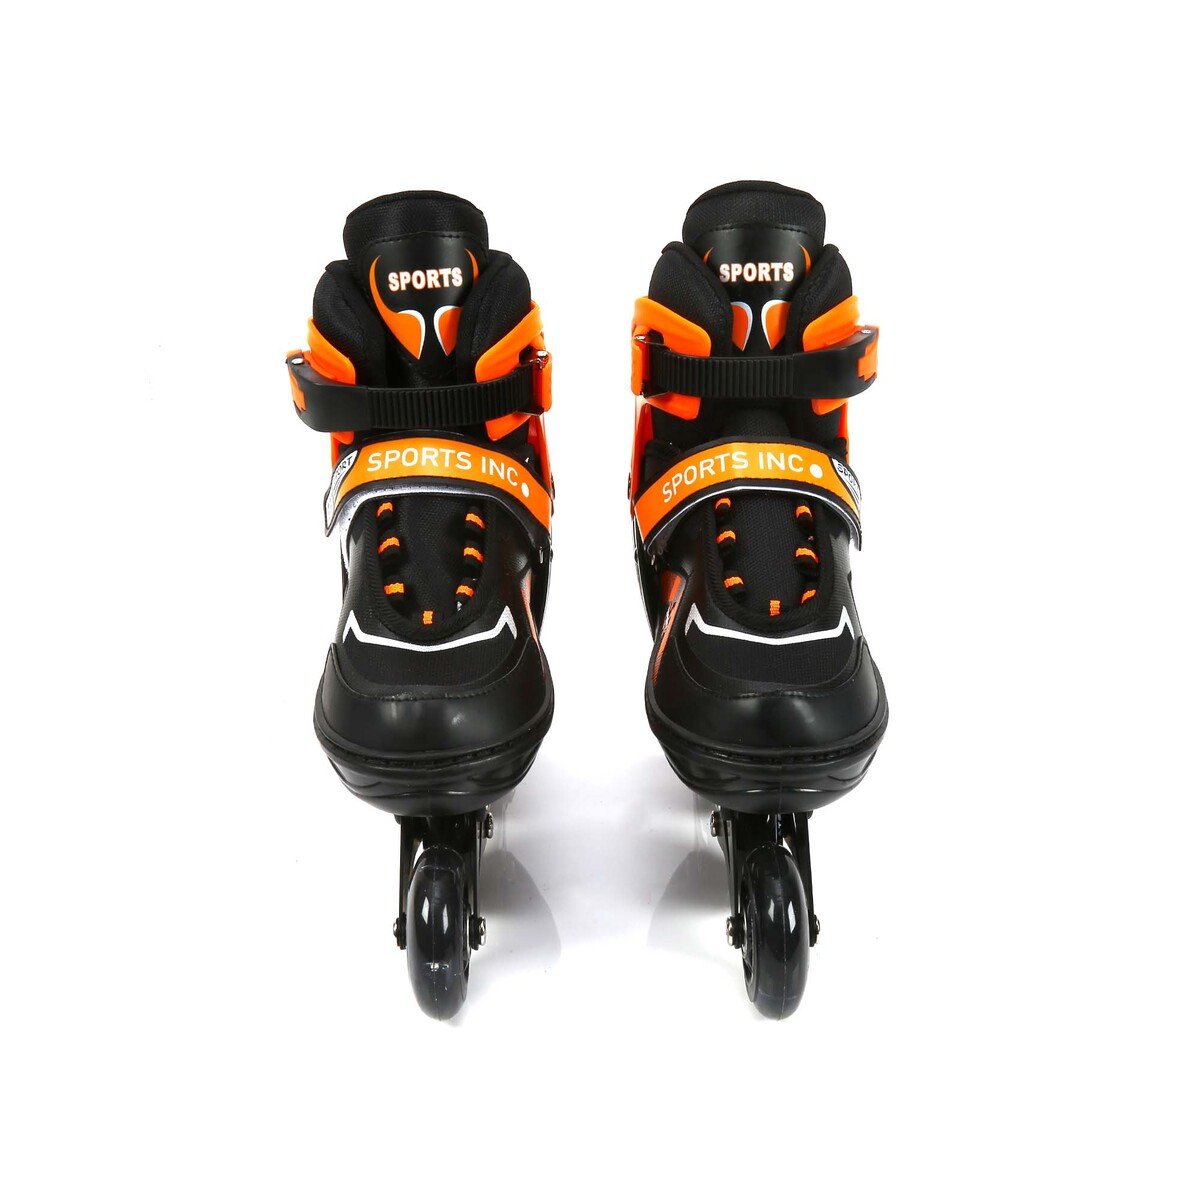 Sports Inc Inline Skate Shoe 4Wheel Kids Size 39-43 AB6-333 Large Assorted Color